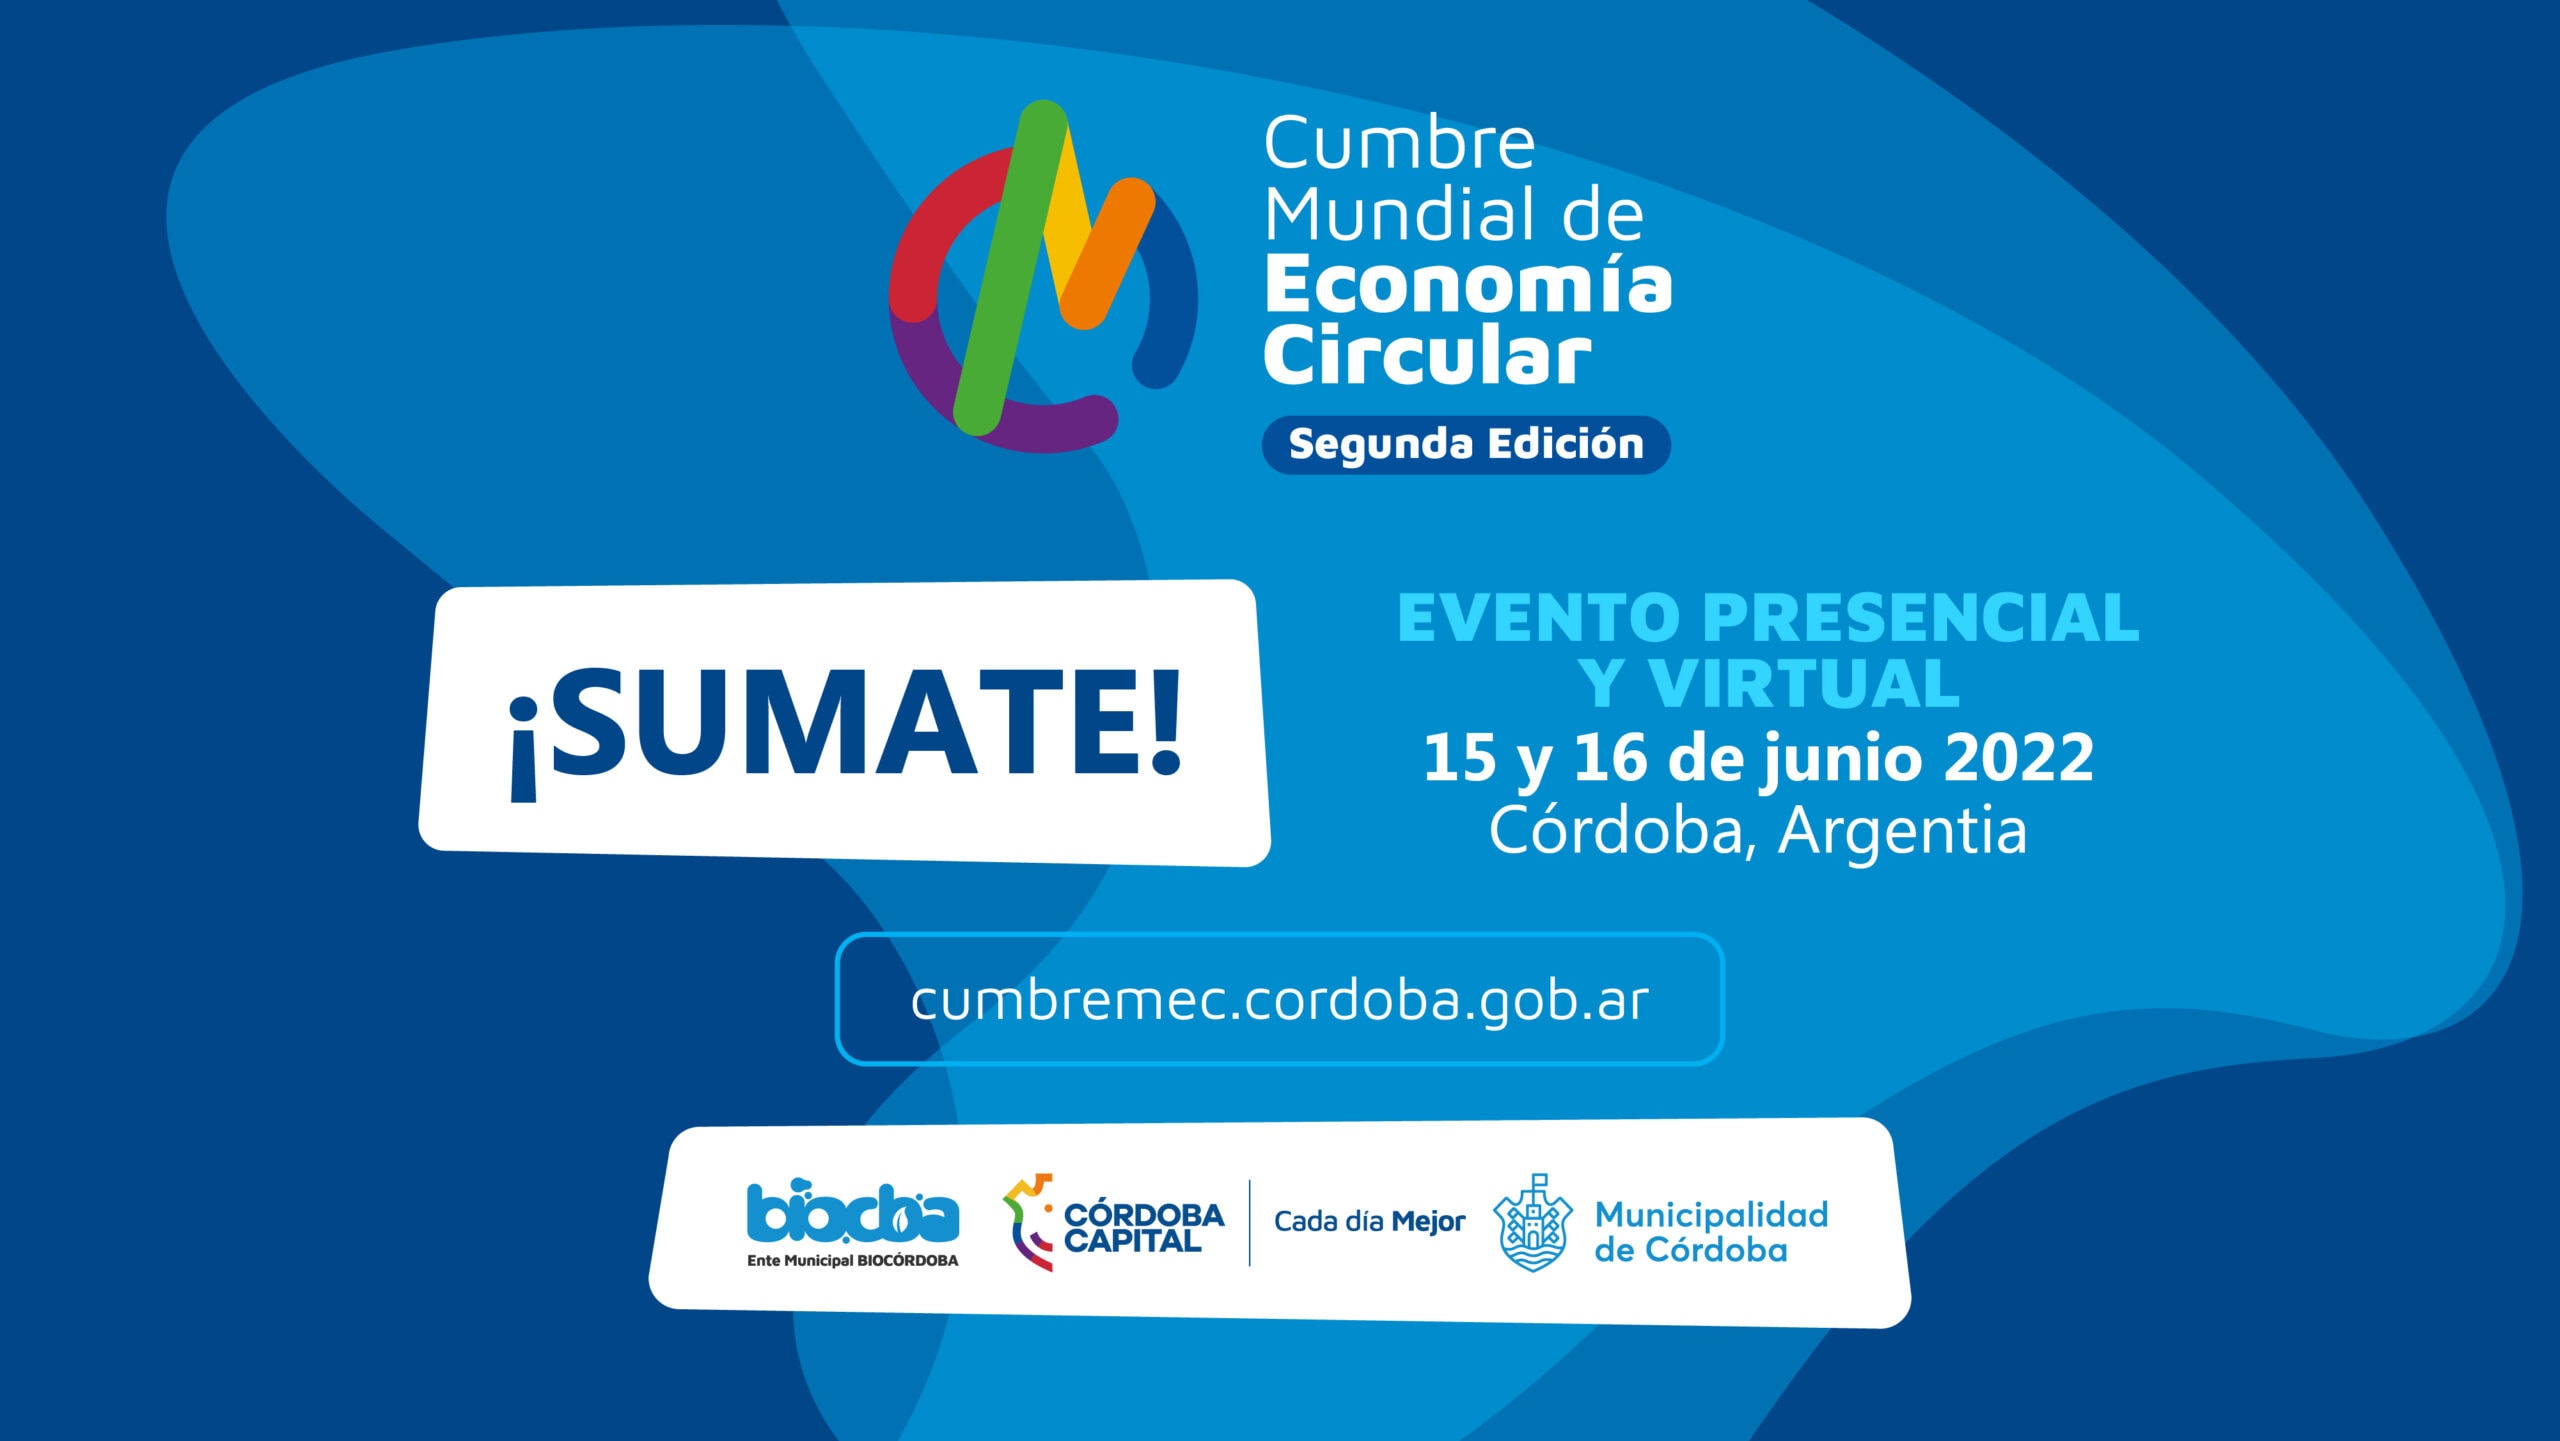 Cumbre de Economía Circular en Argentina